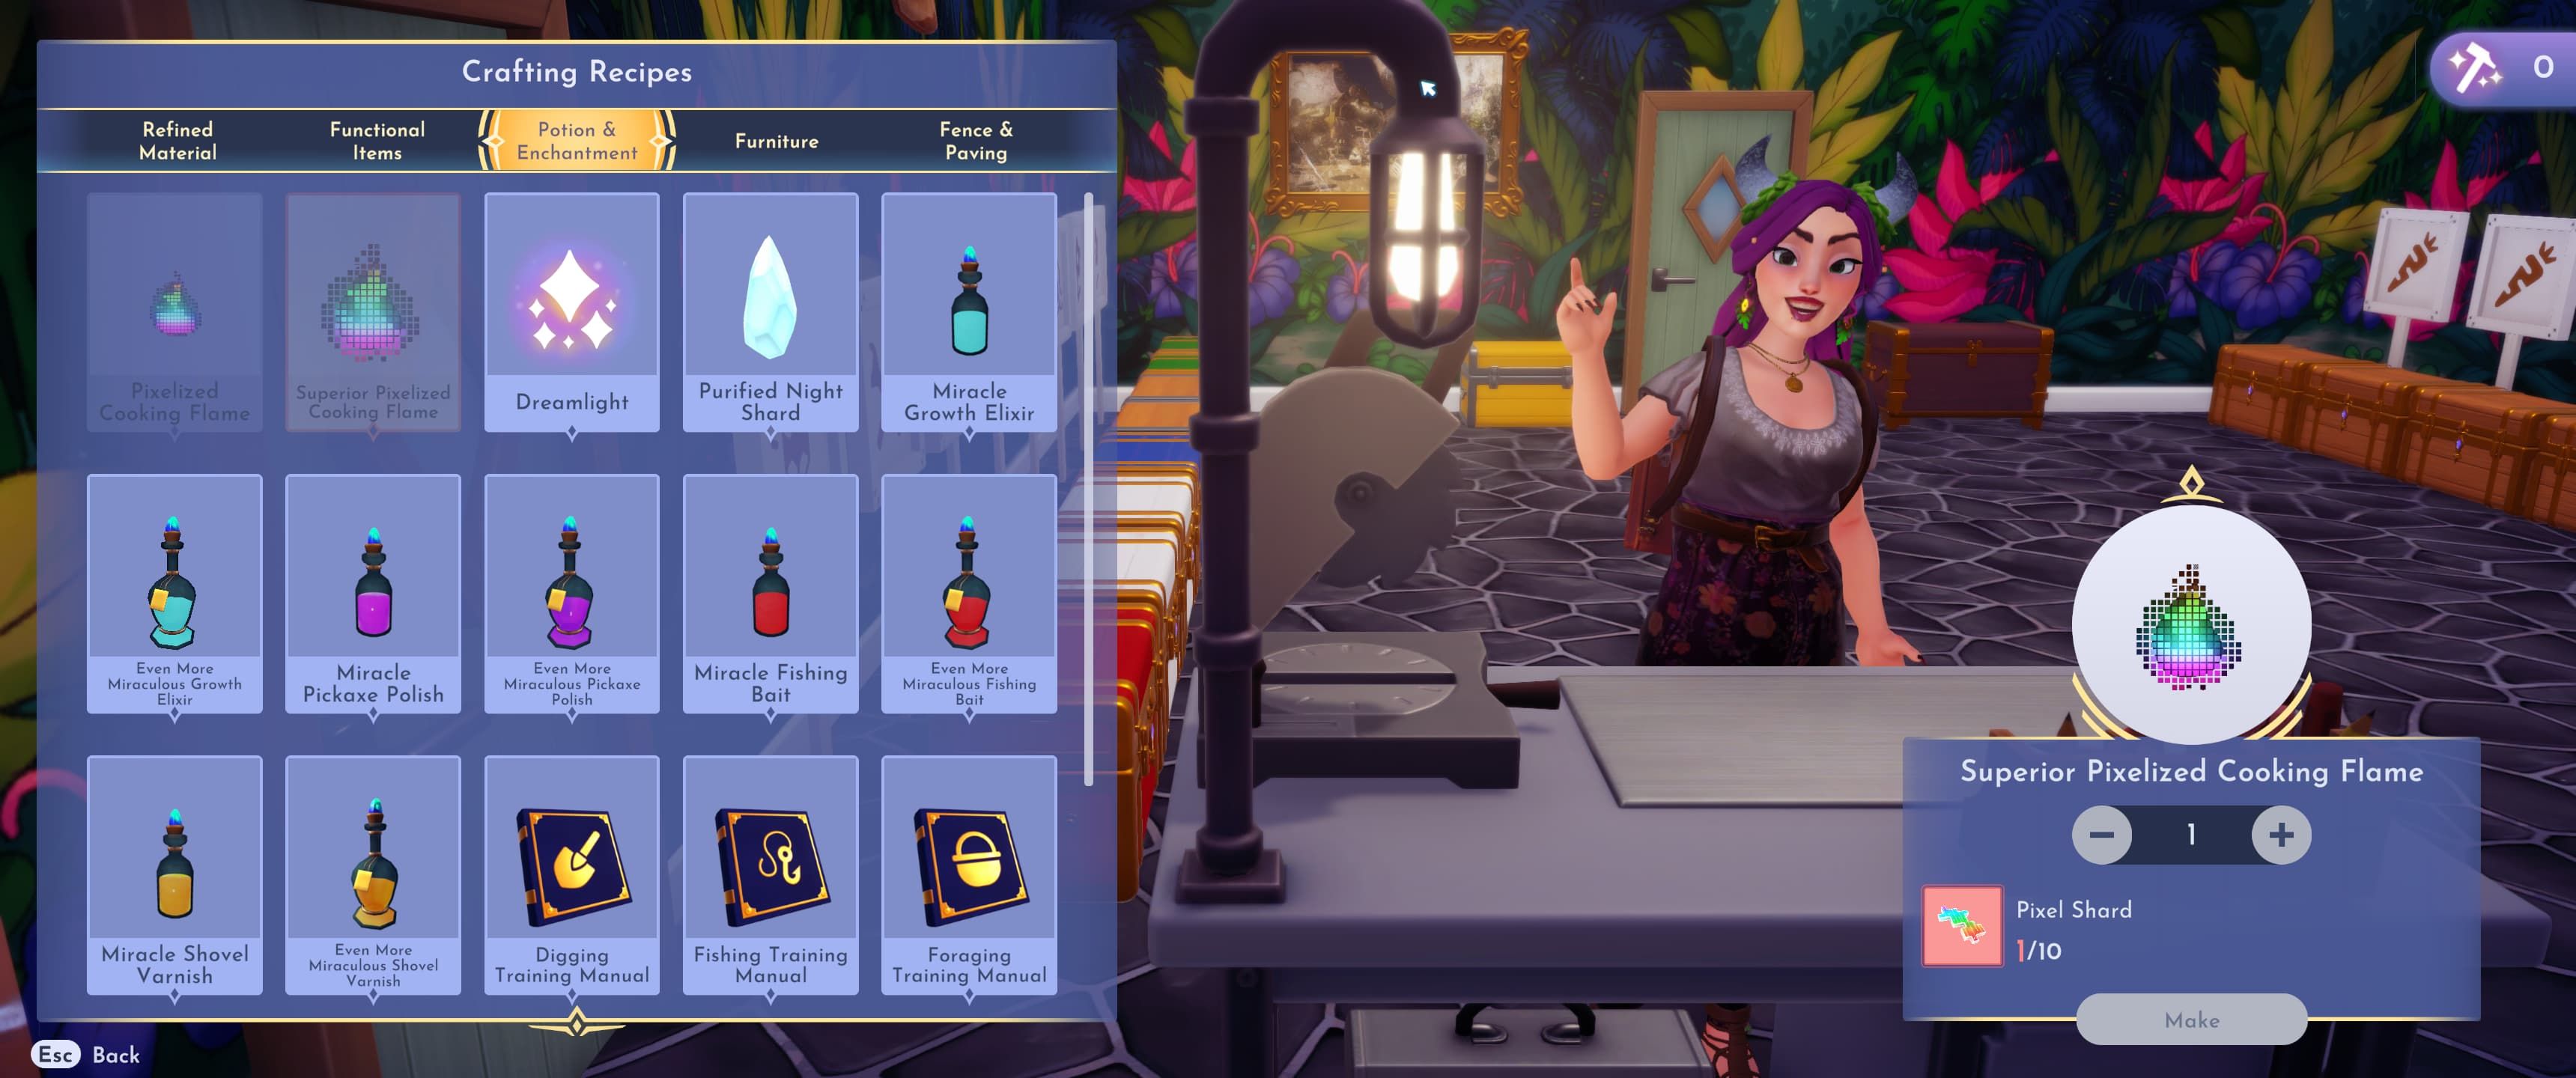 Ricetta delle Fiamme da Cucina Pixelate in Disney Dreamlight Valley multiplayer.